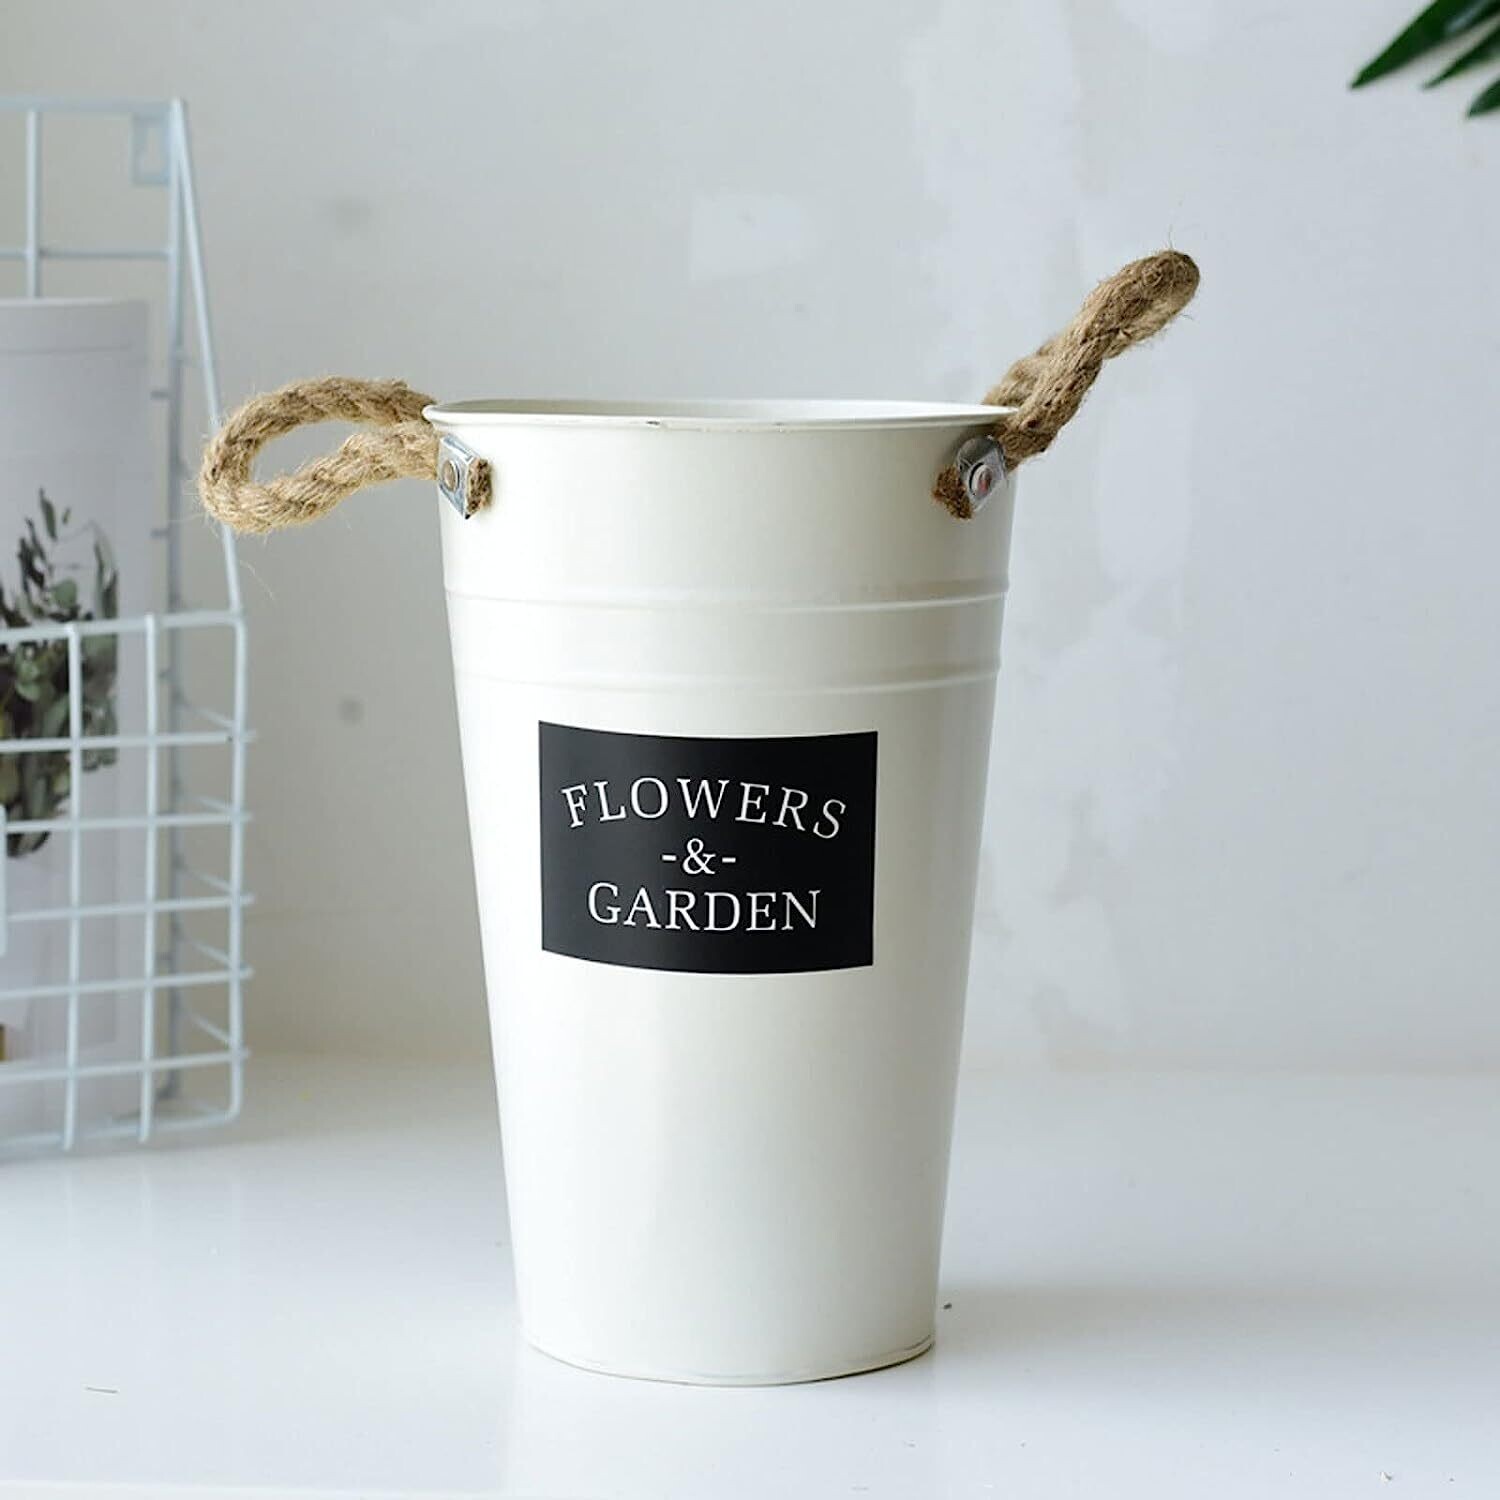 Flower Bucket,outdoor Simple Iron Flower Bucket,garden Flower Bucket,rustic French Country Style Flower Bucket (Medium)